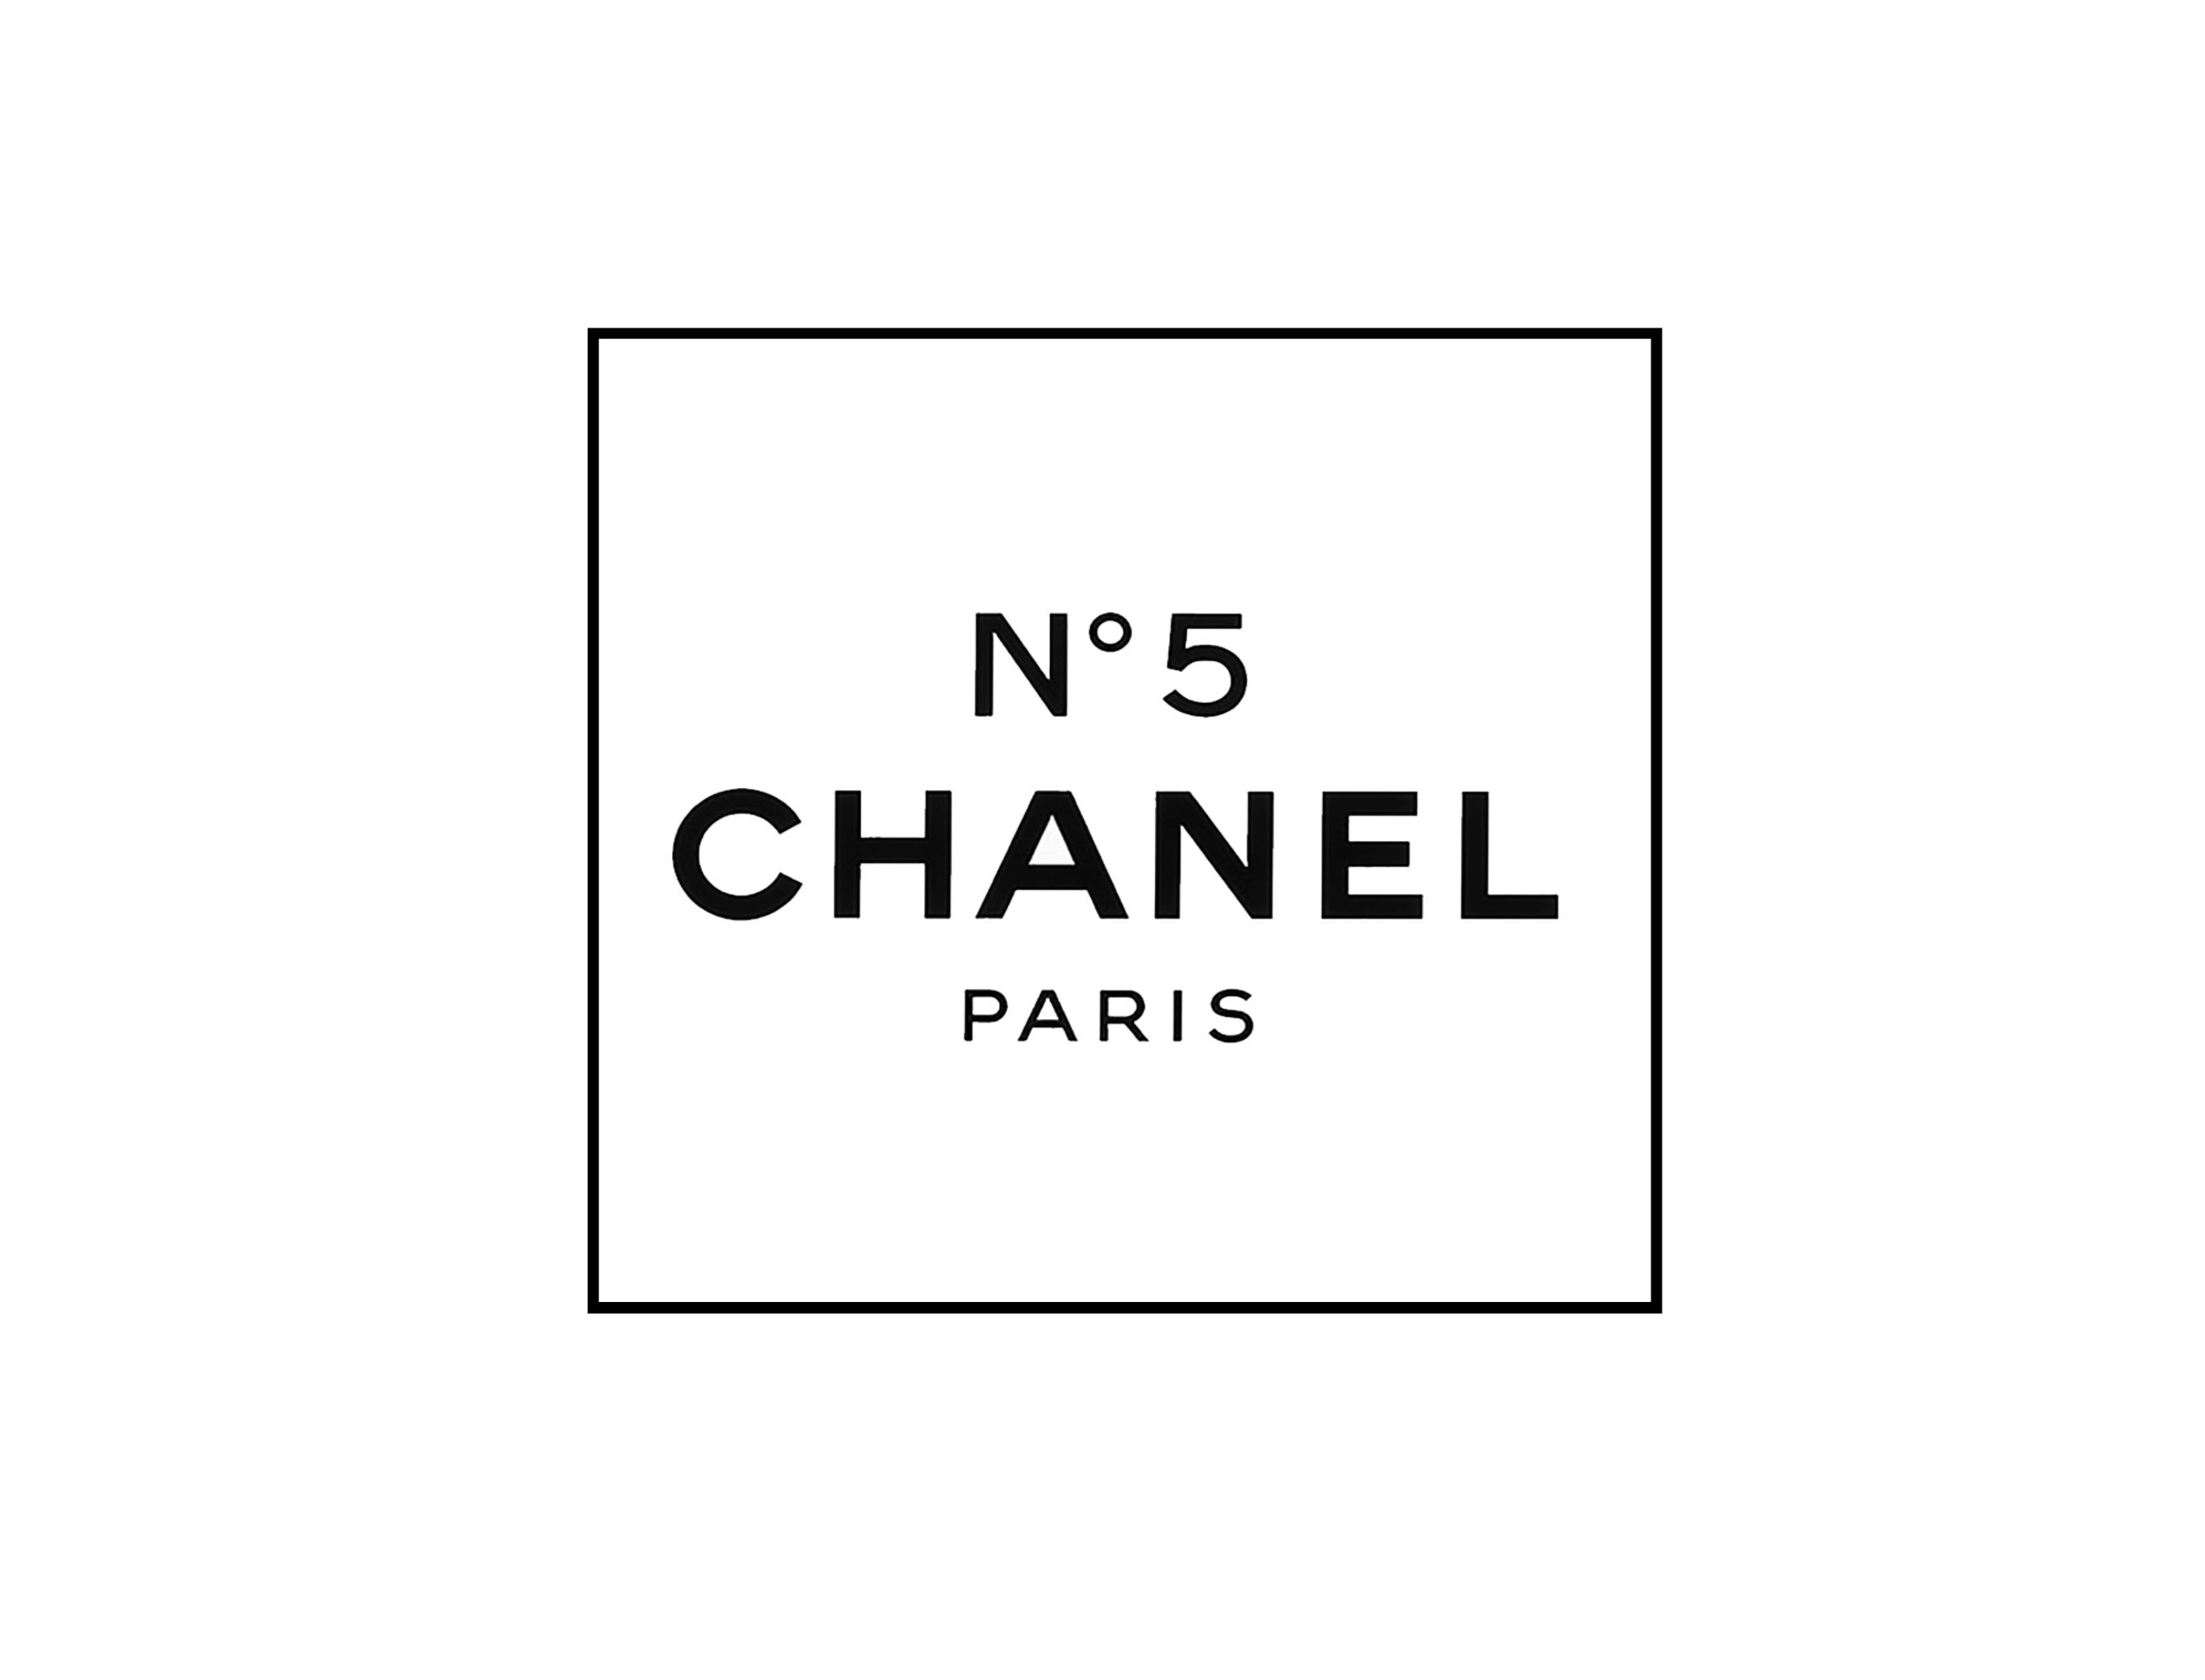 Chanel No 5 label